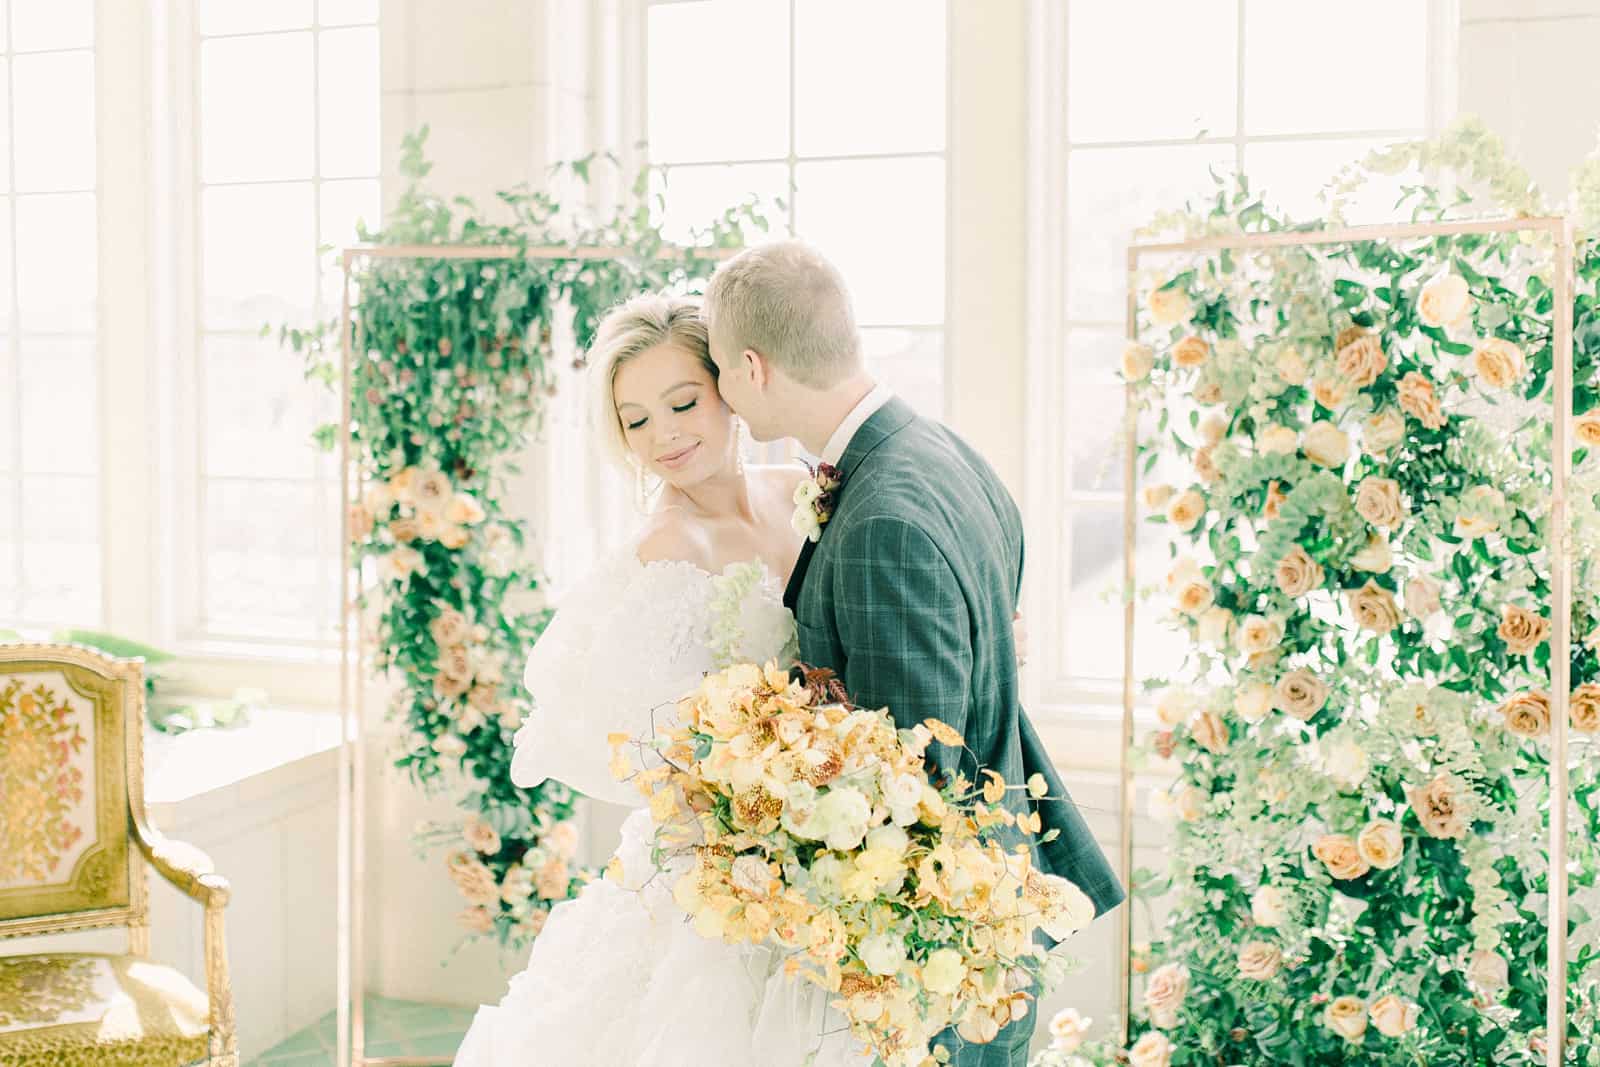 Bride and groom wedding ceremony with elaborate floral backdrop